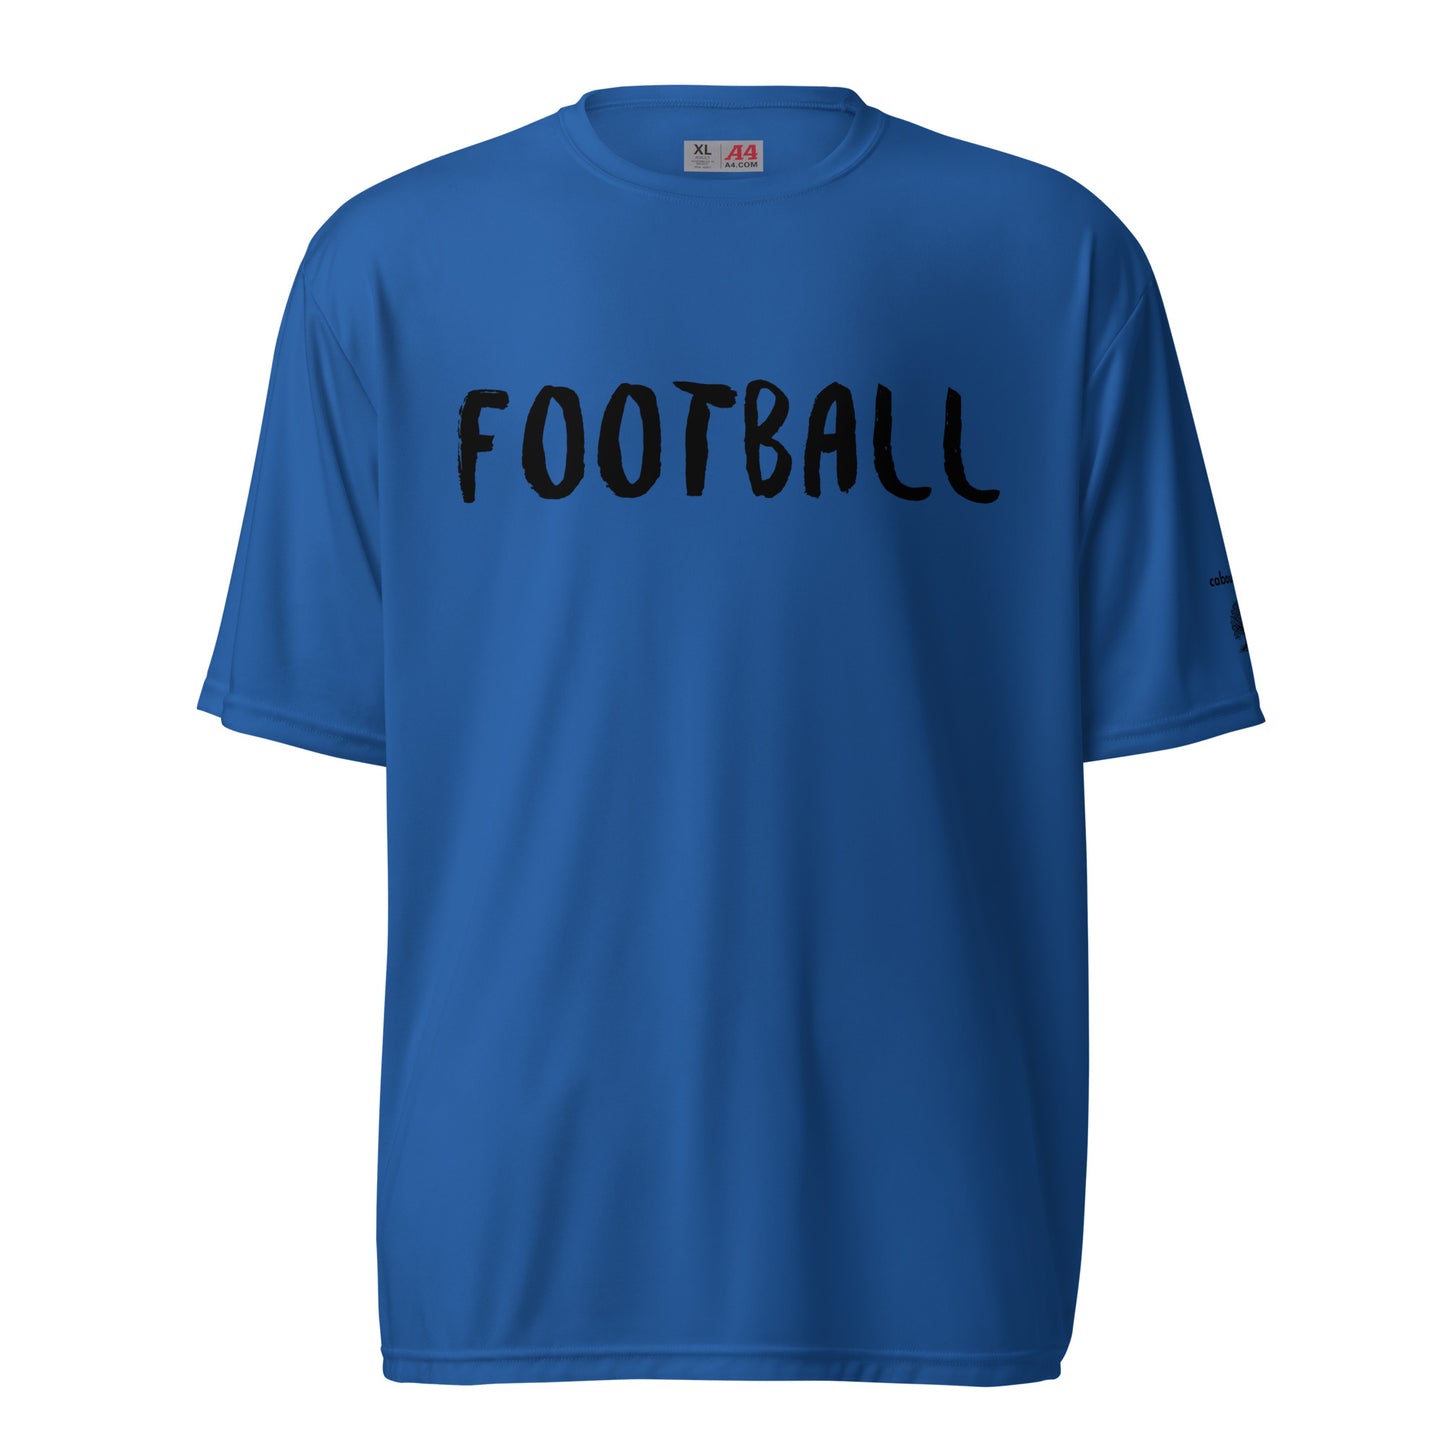 Unisex performance crew neck t-shirt - Football (Black)